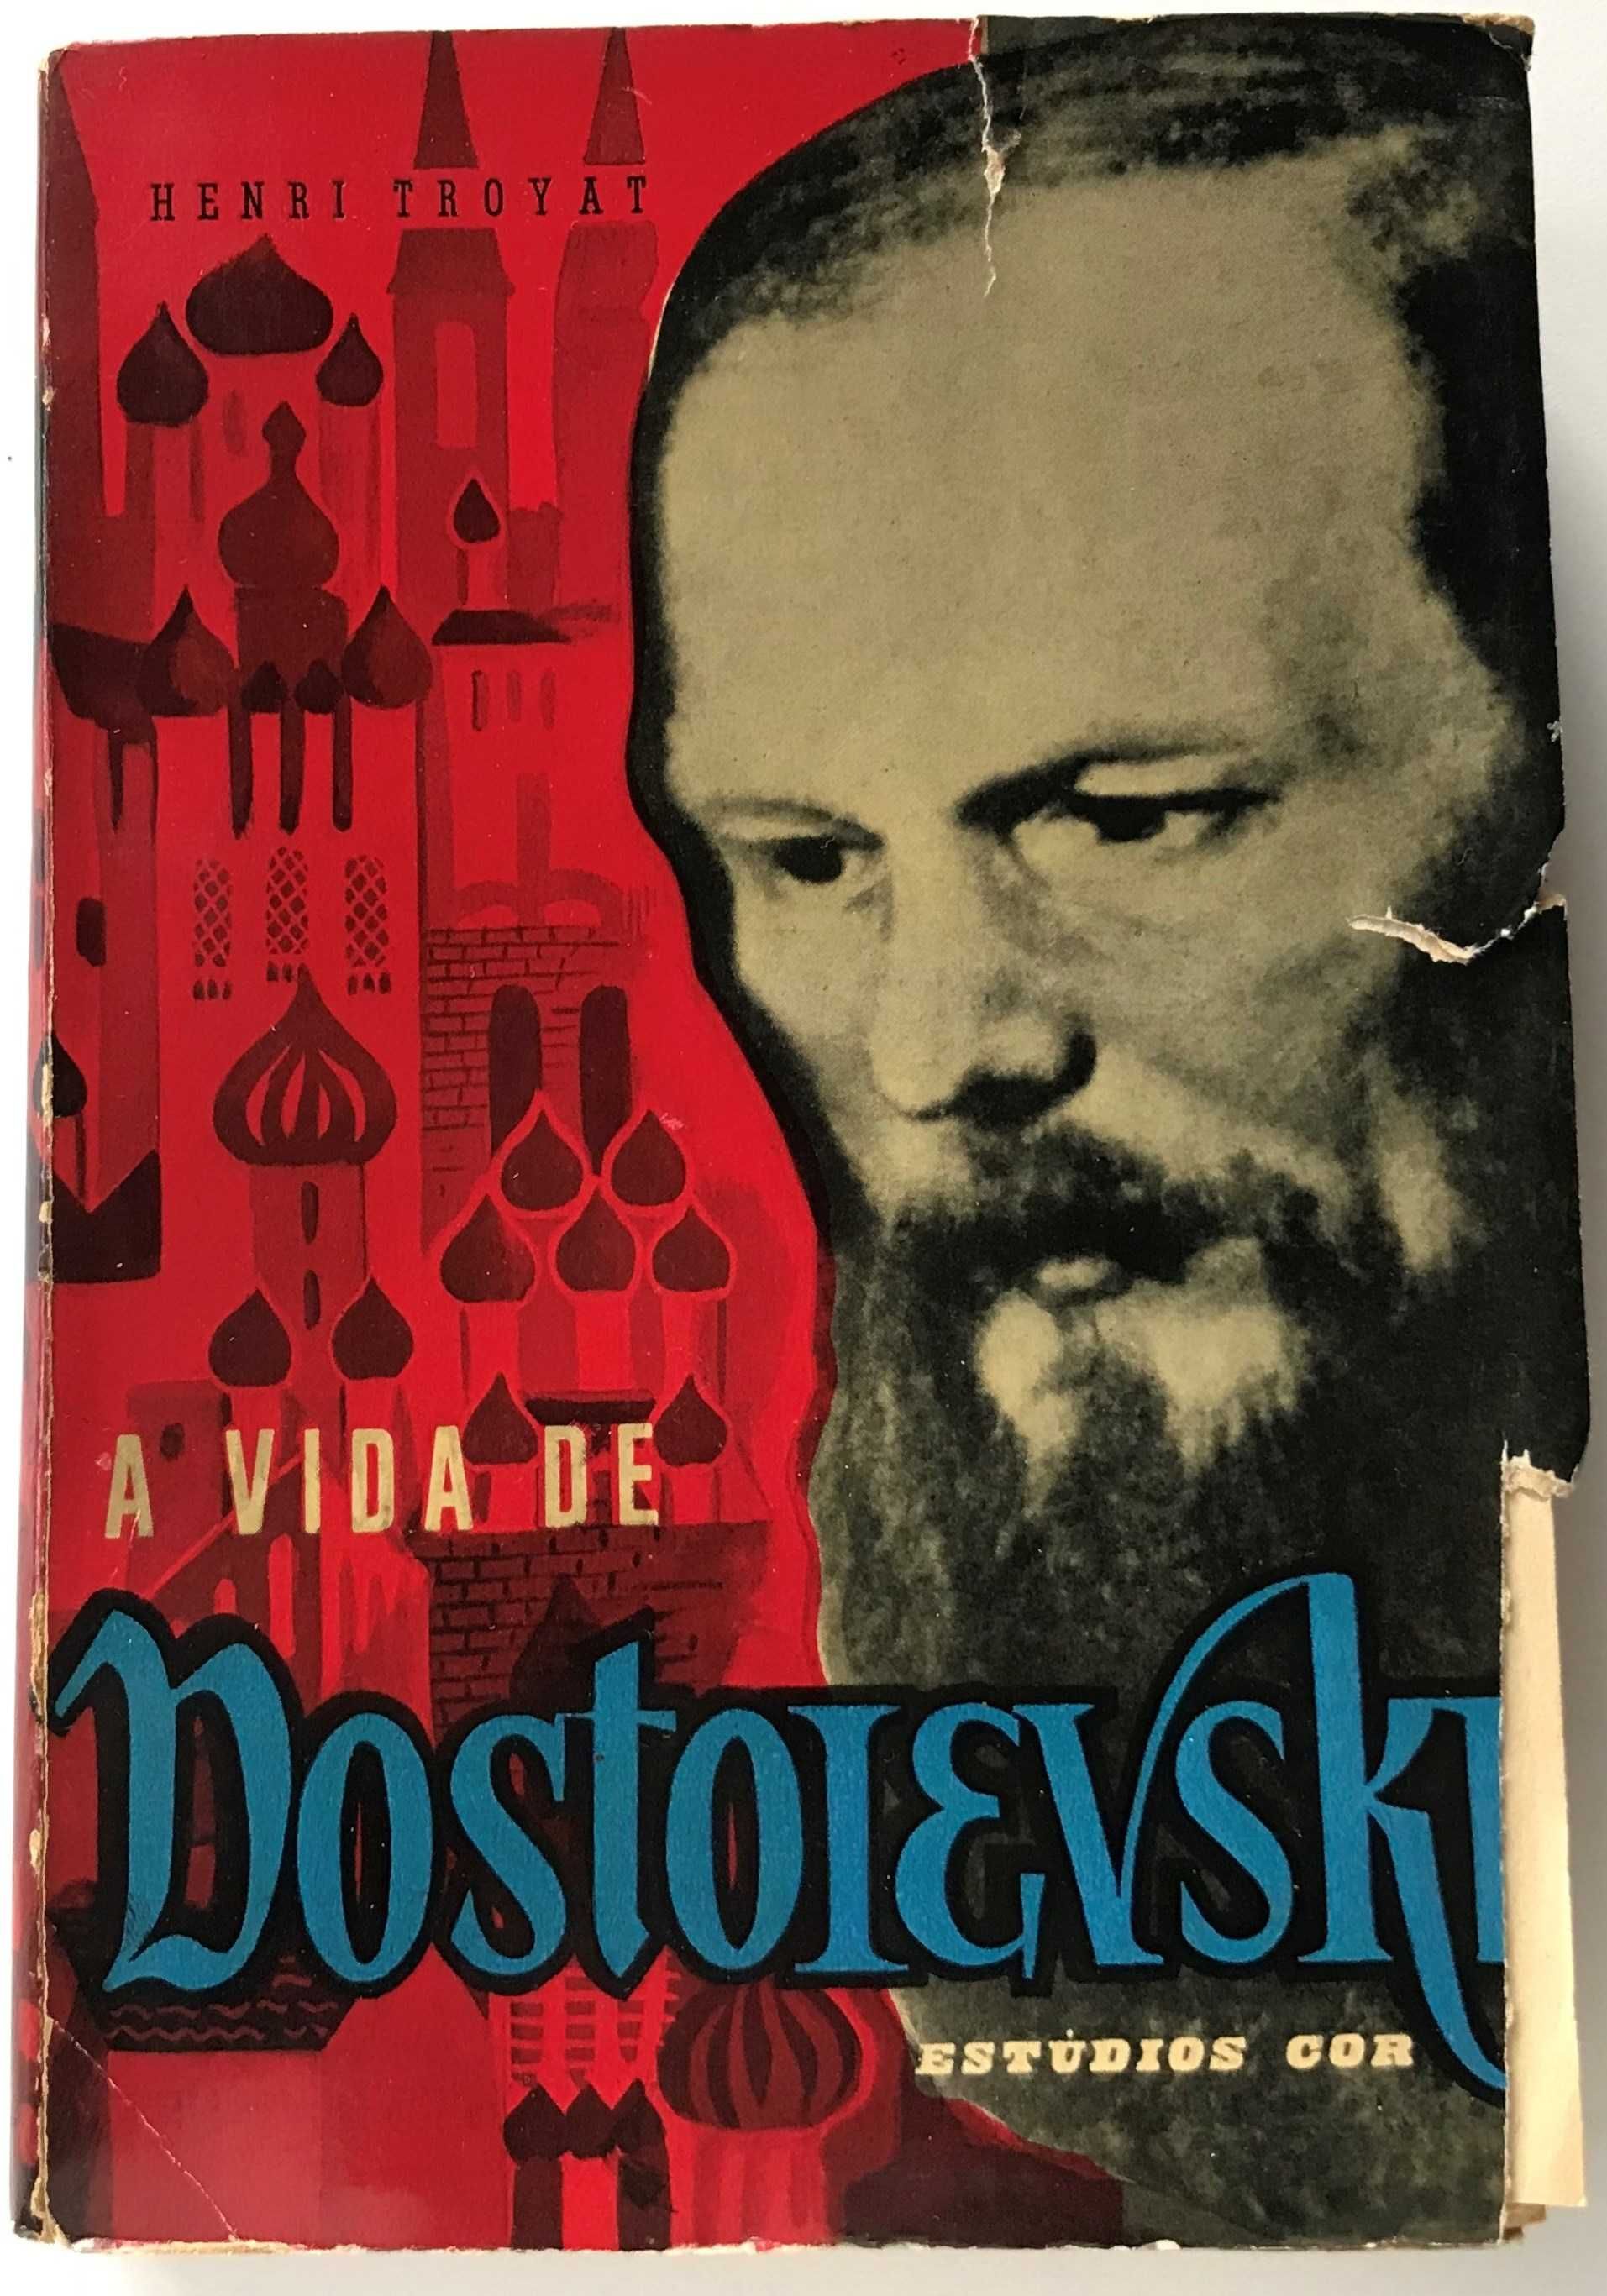 Alfarrabismo 1958: Biografia "A Vida da Dostoievski" / Henri Troyat